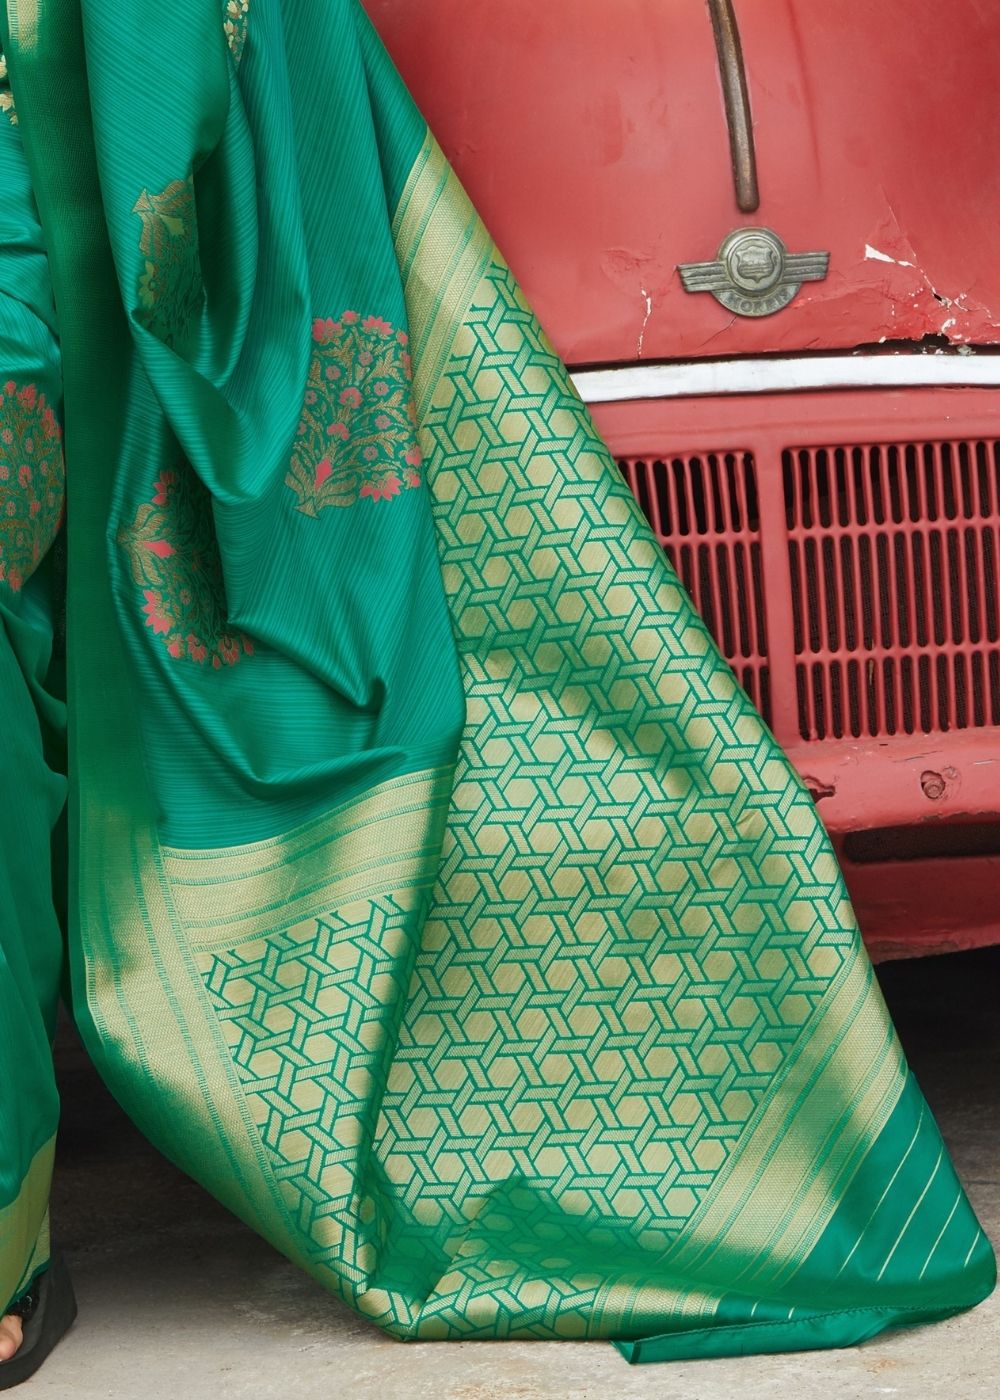 Green Silk Saree with Heavy Zari work Golden Pallu - Colorful Saree